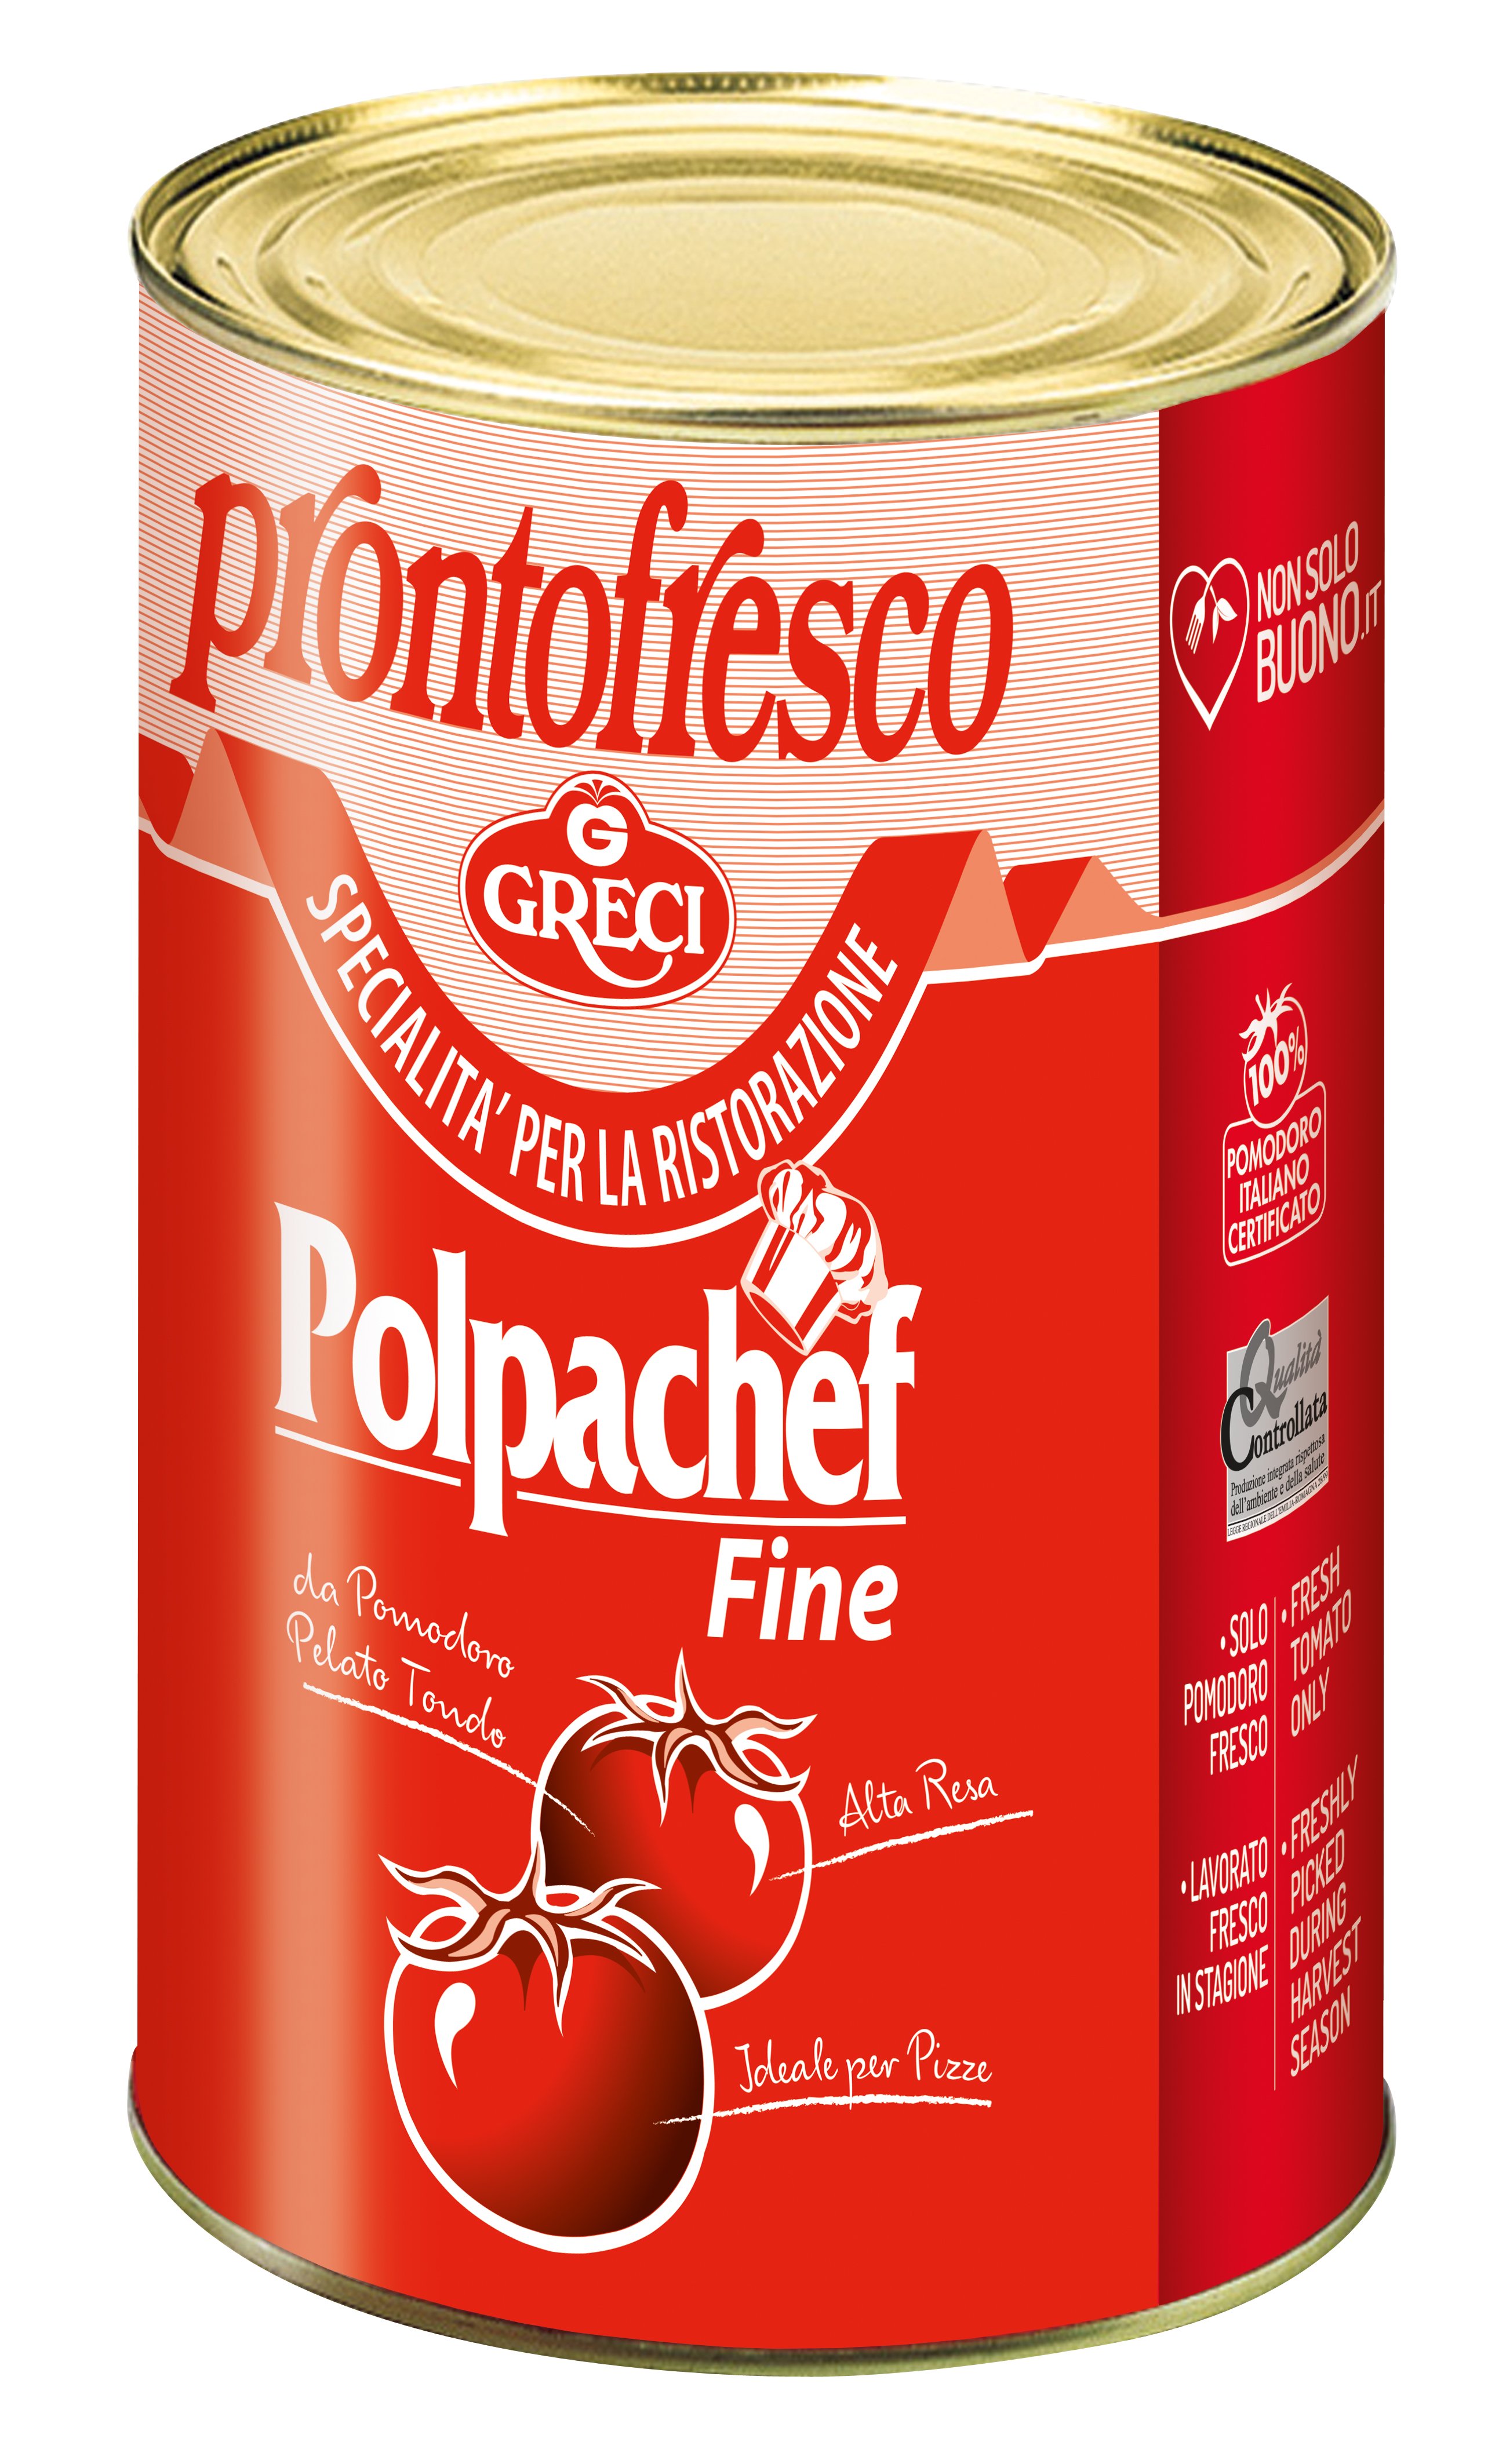 Polpachef Fine 4.05kg (3) - Click for more info